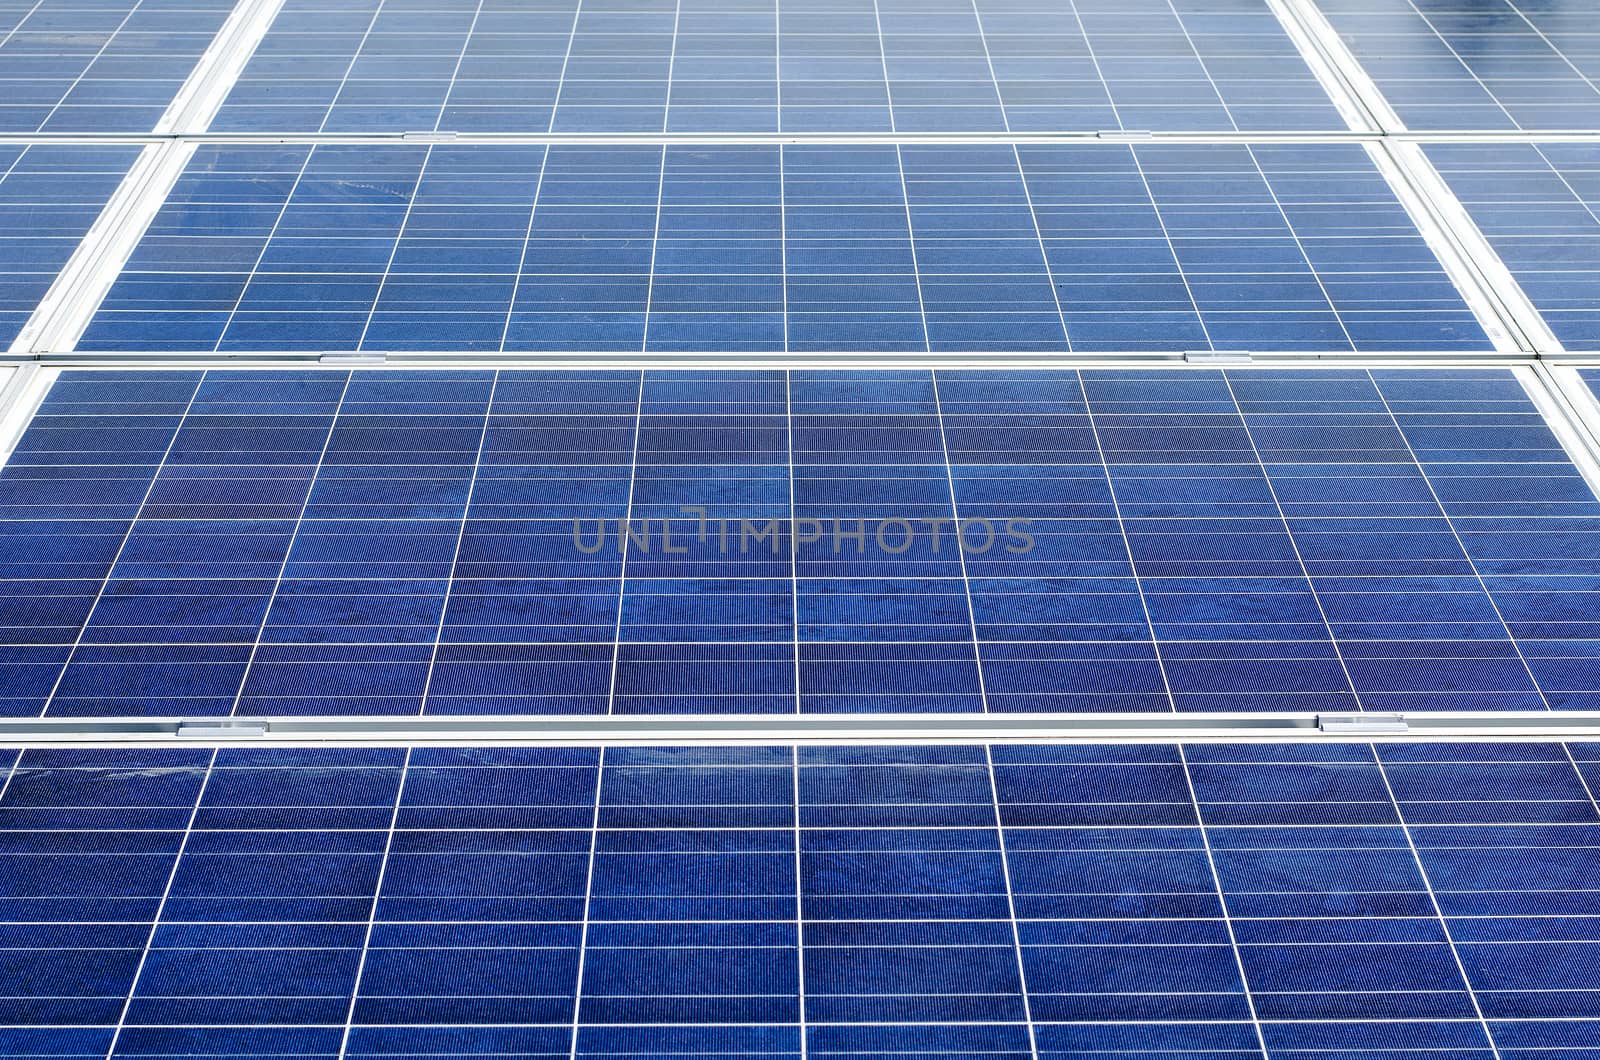 Solar panels by eenevski